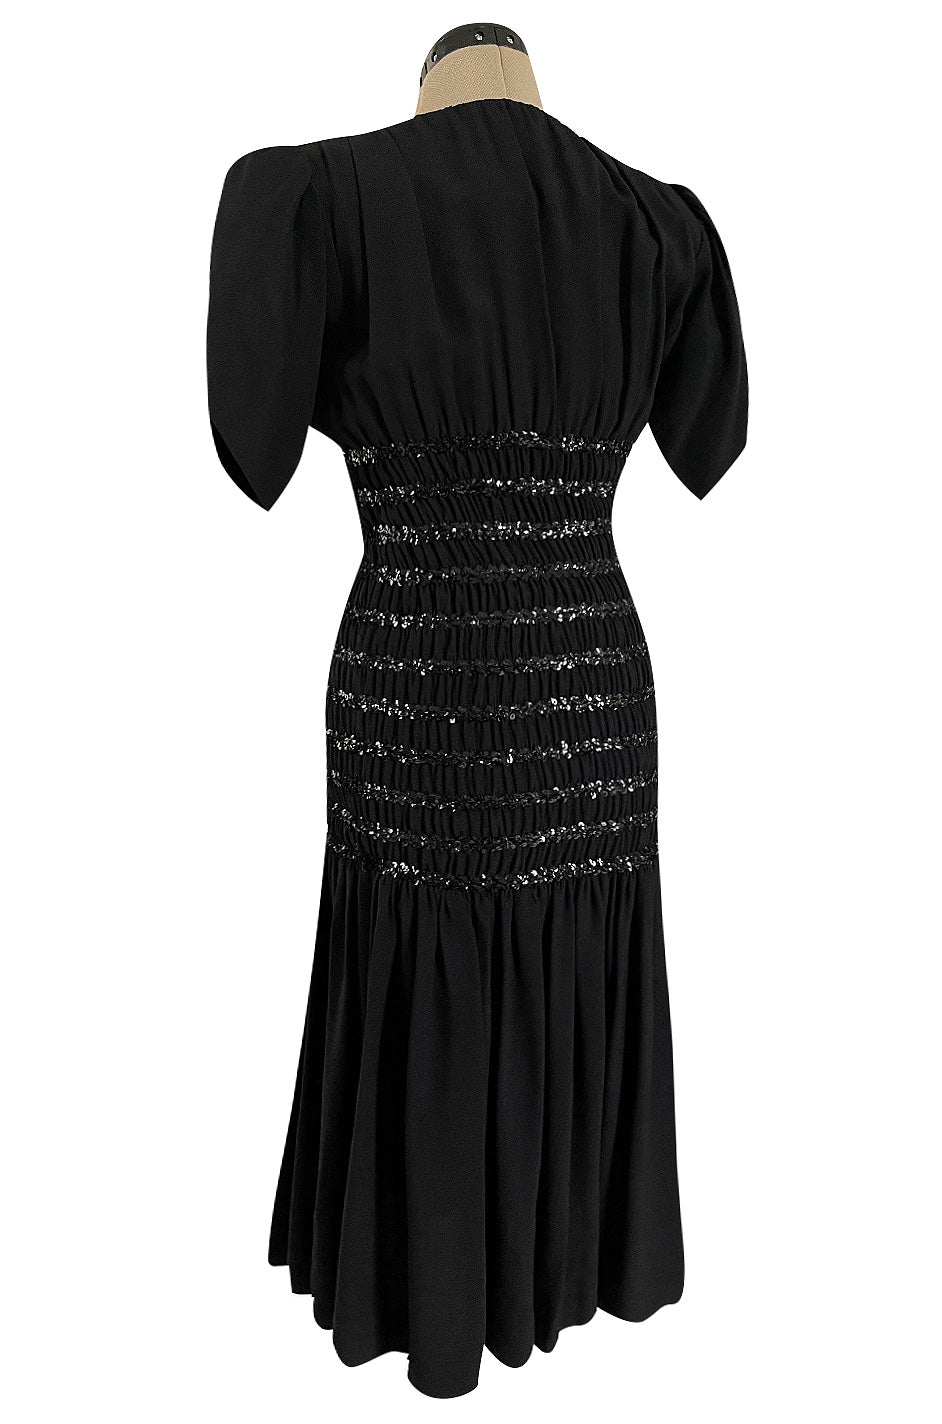 Fall 1983 Yves Saint Laurent Ad Campaign Black Silk Crepe Dress w Sequ ...